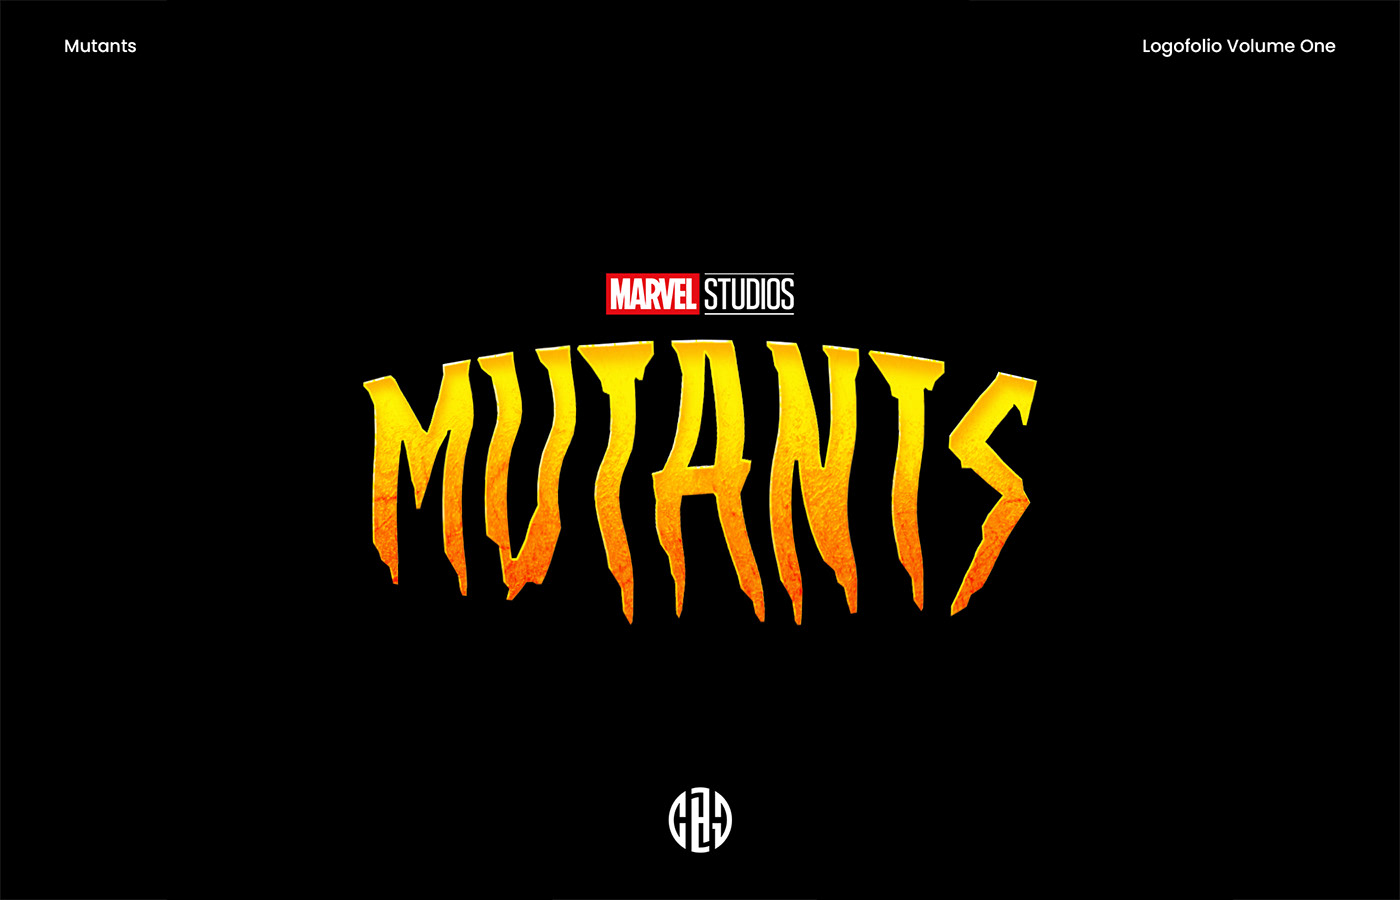 Avengers Captain Marvel iron man logo logofolio logos marvel Marvel Studies mcu spider-man